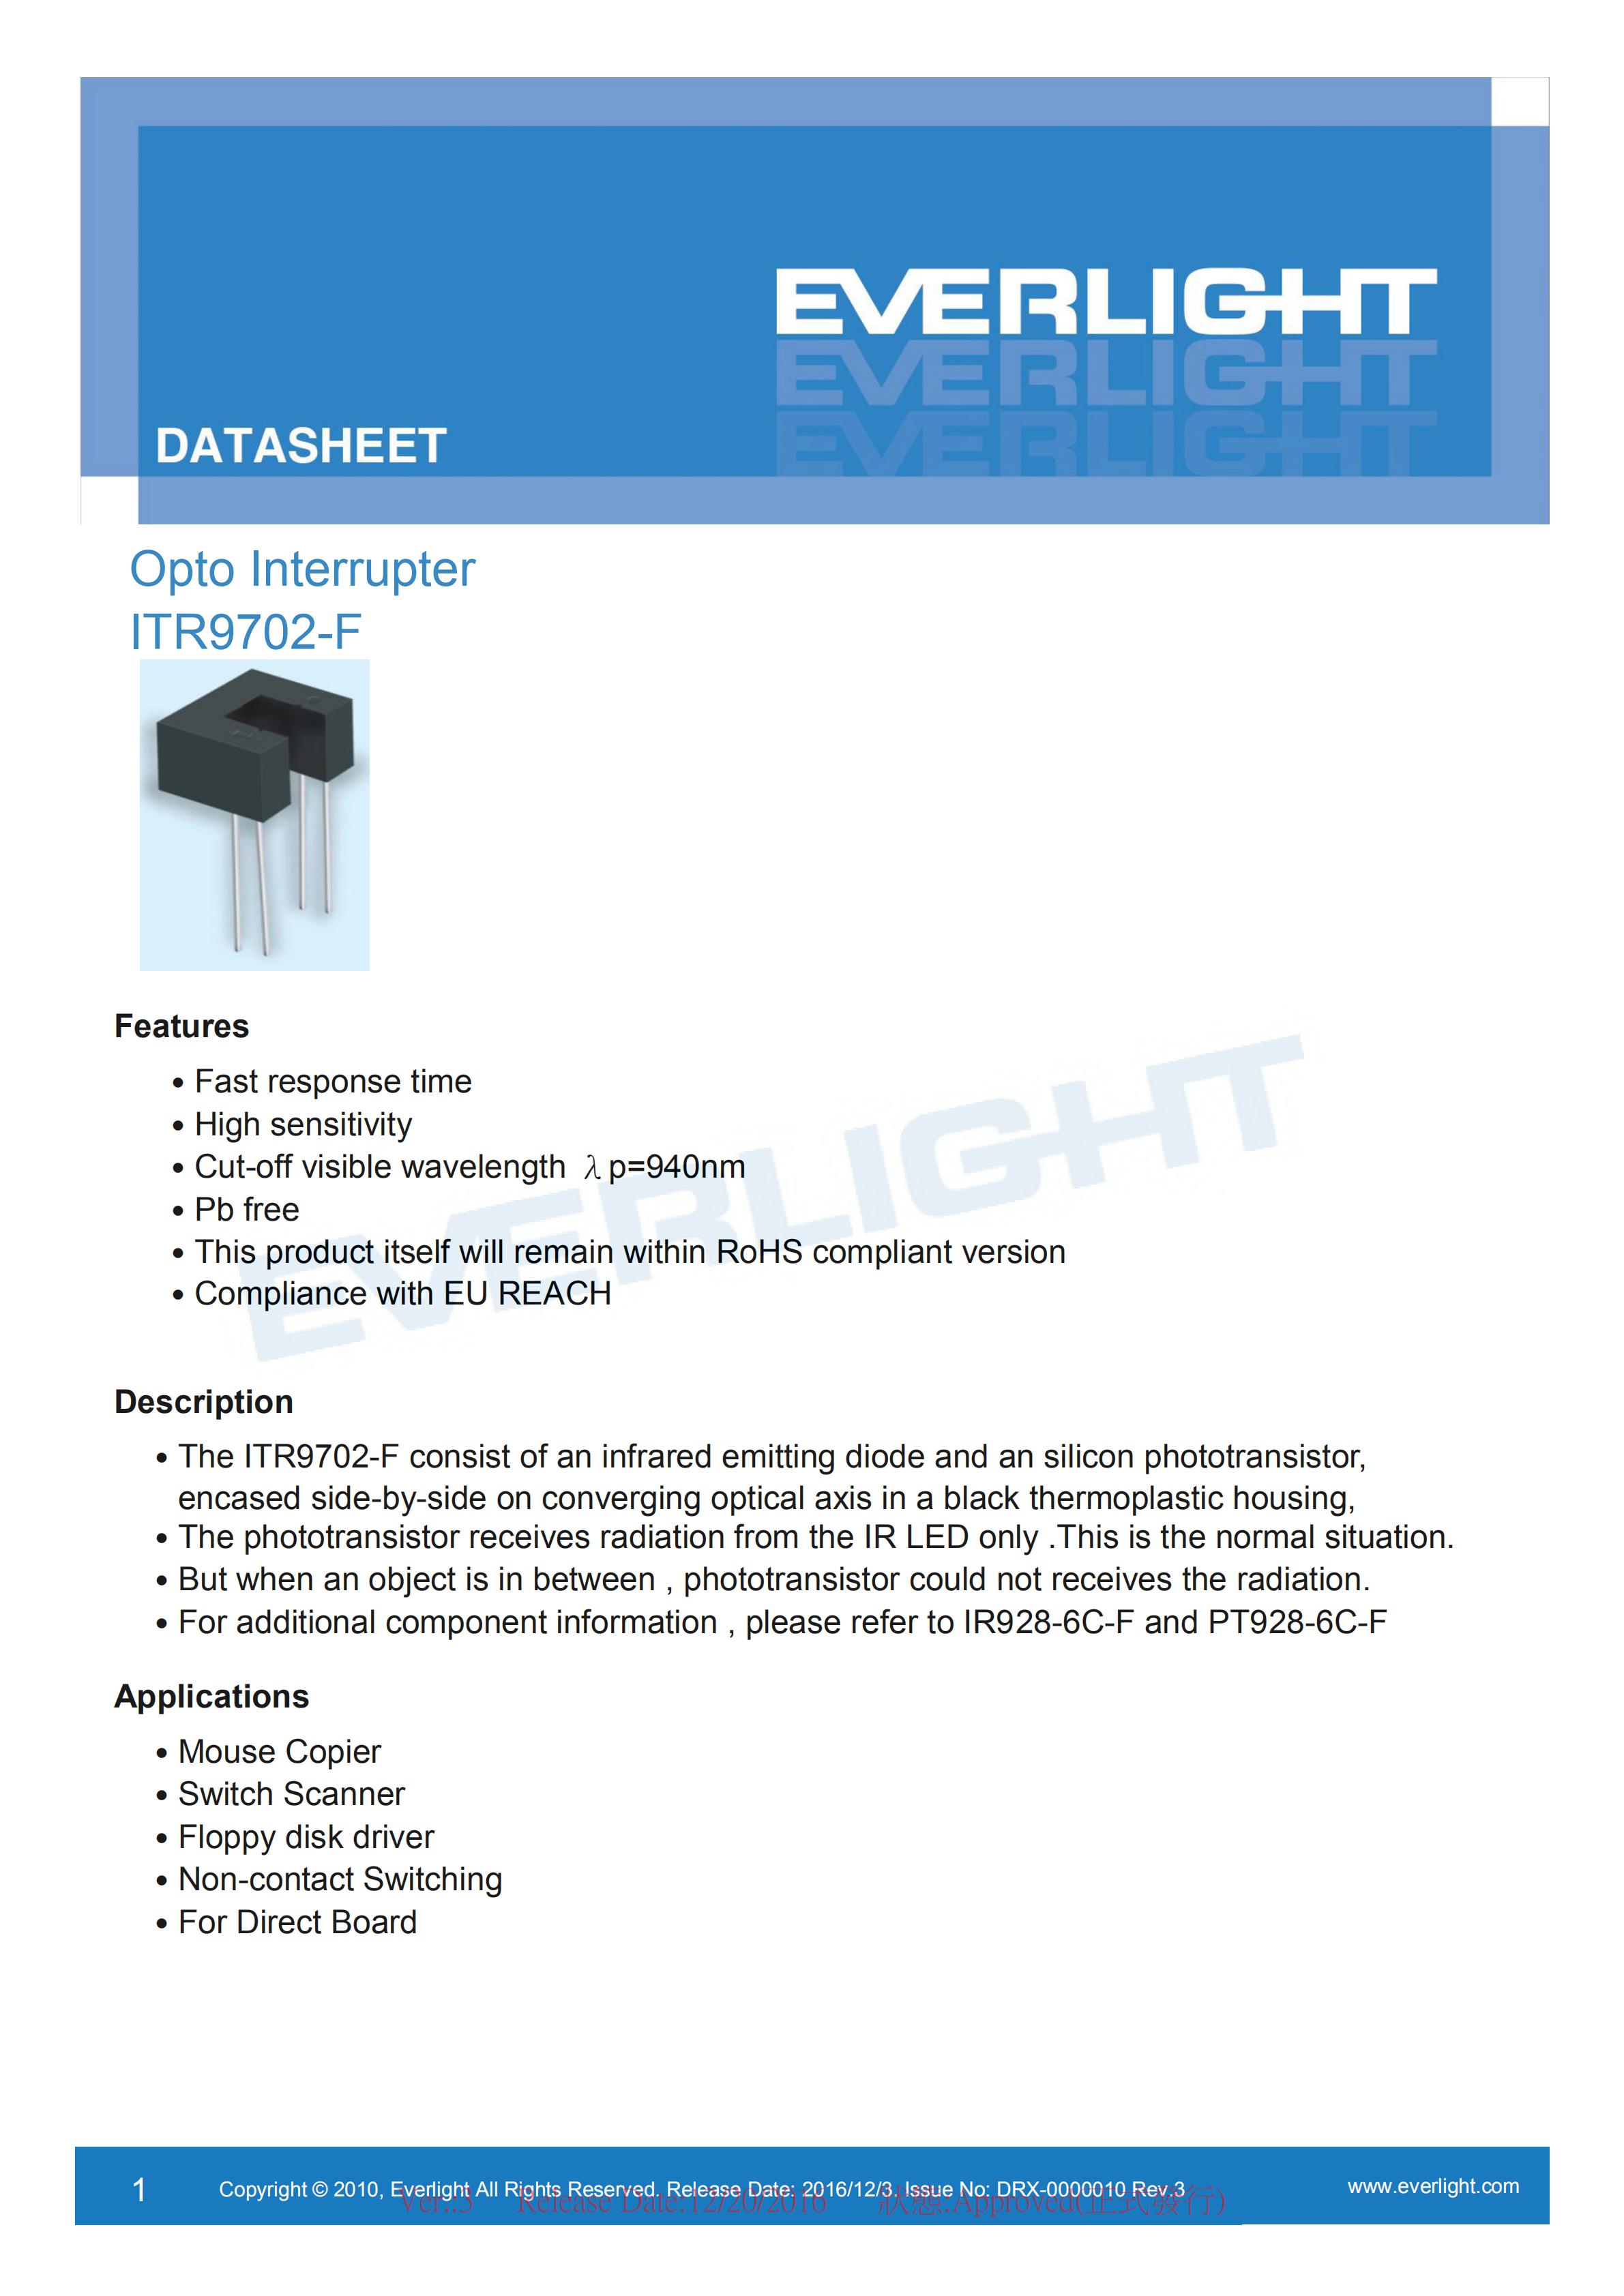 EVERLIGHT Optical Switch ITR9702-F Opto Interrupter Datasheet